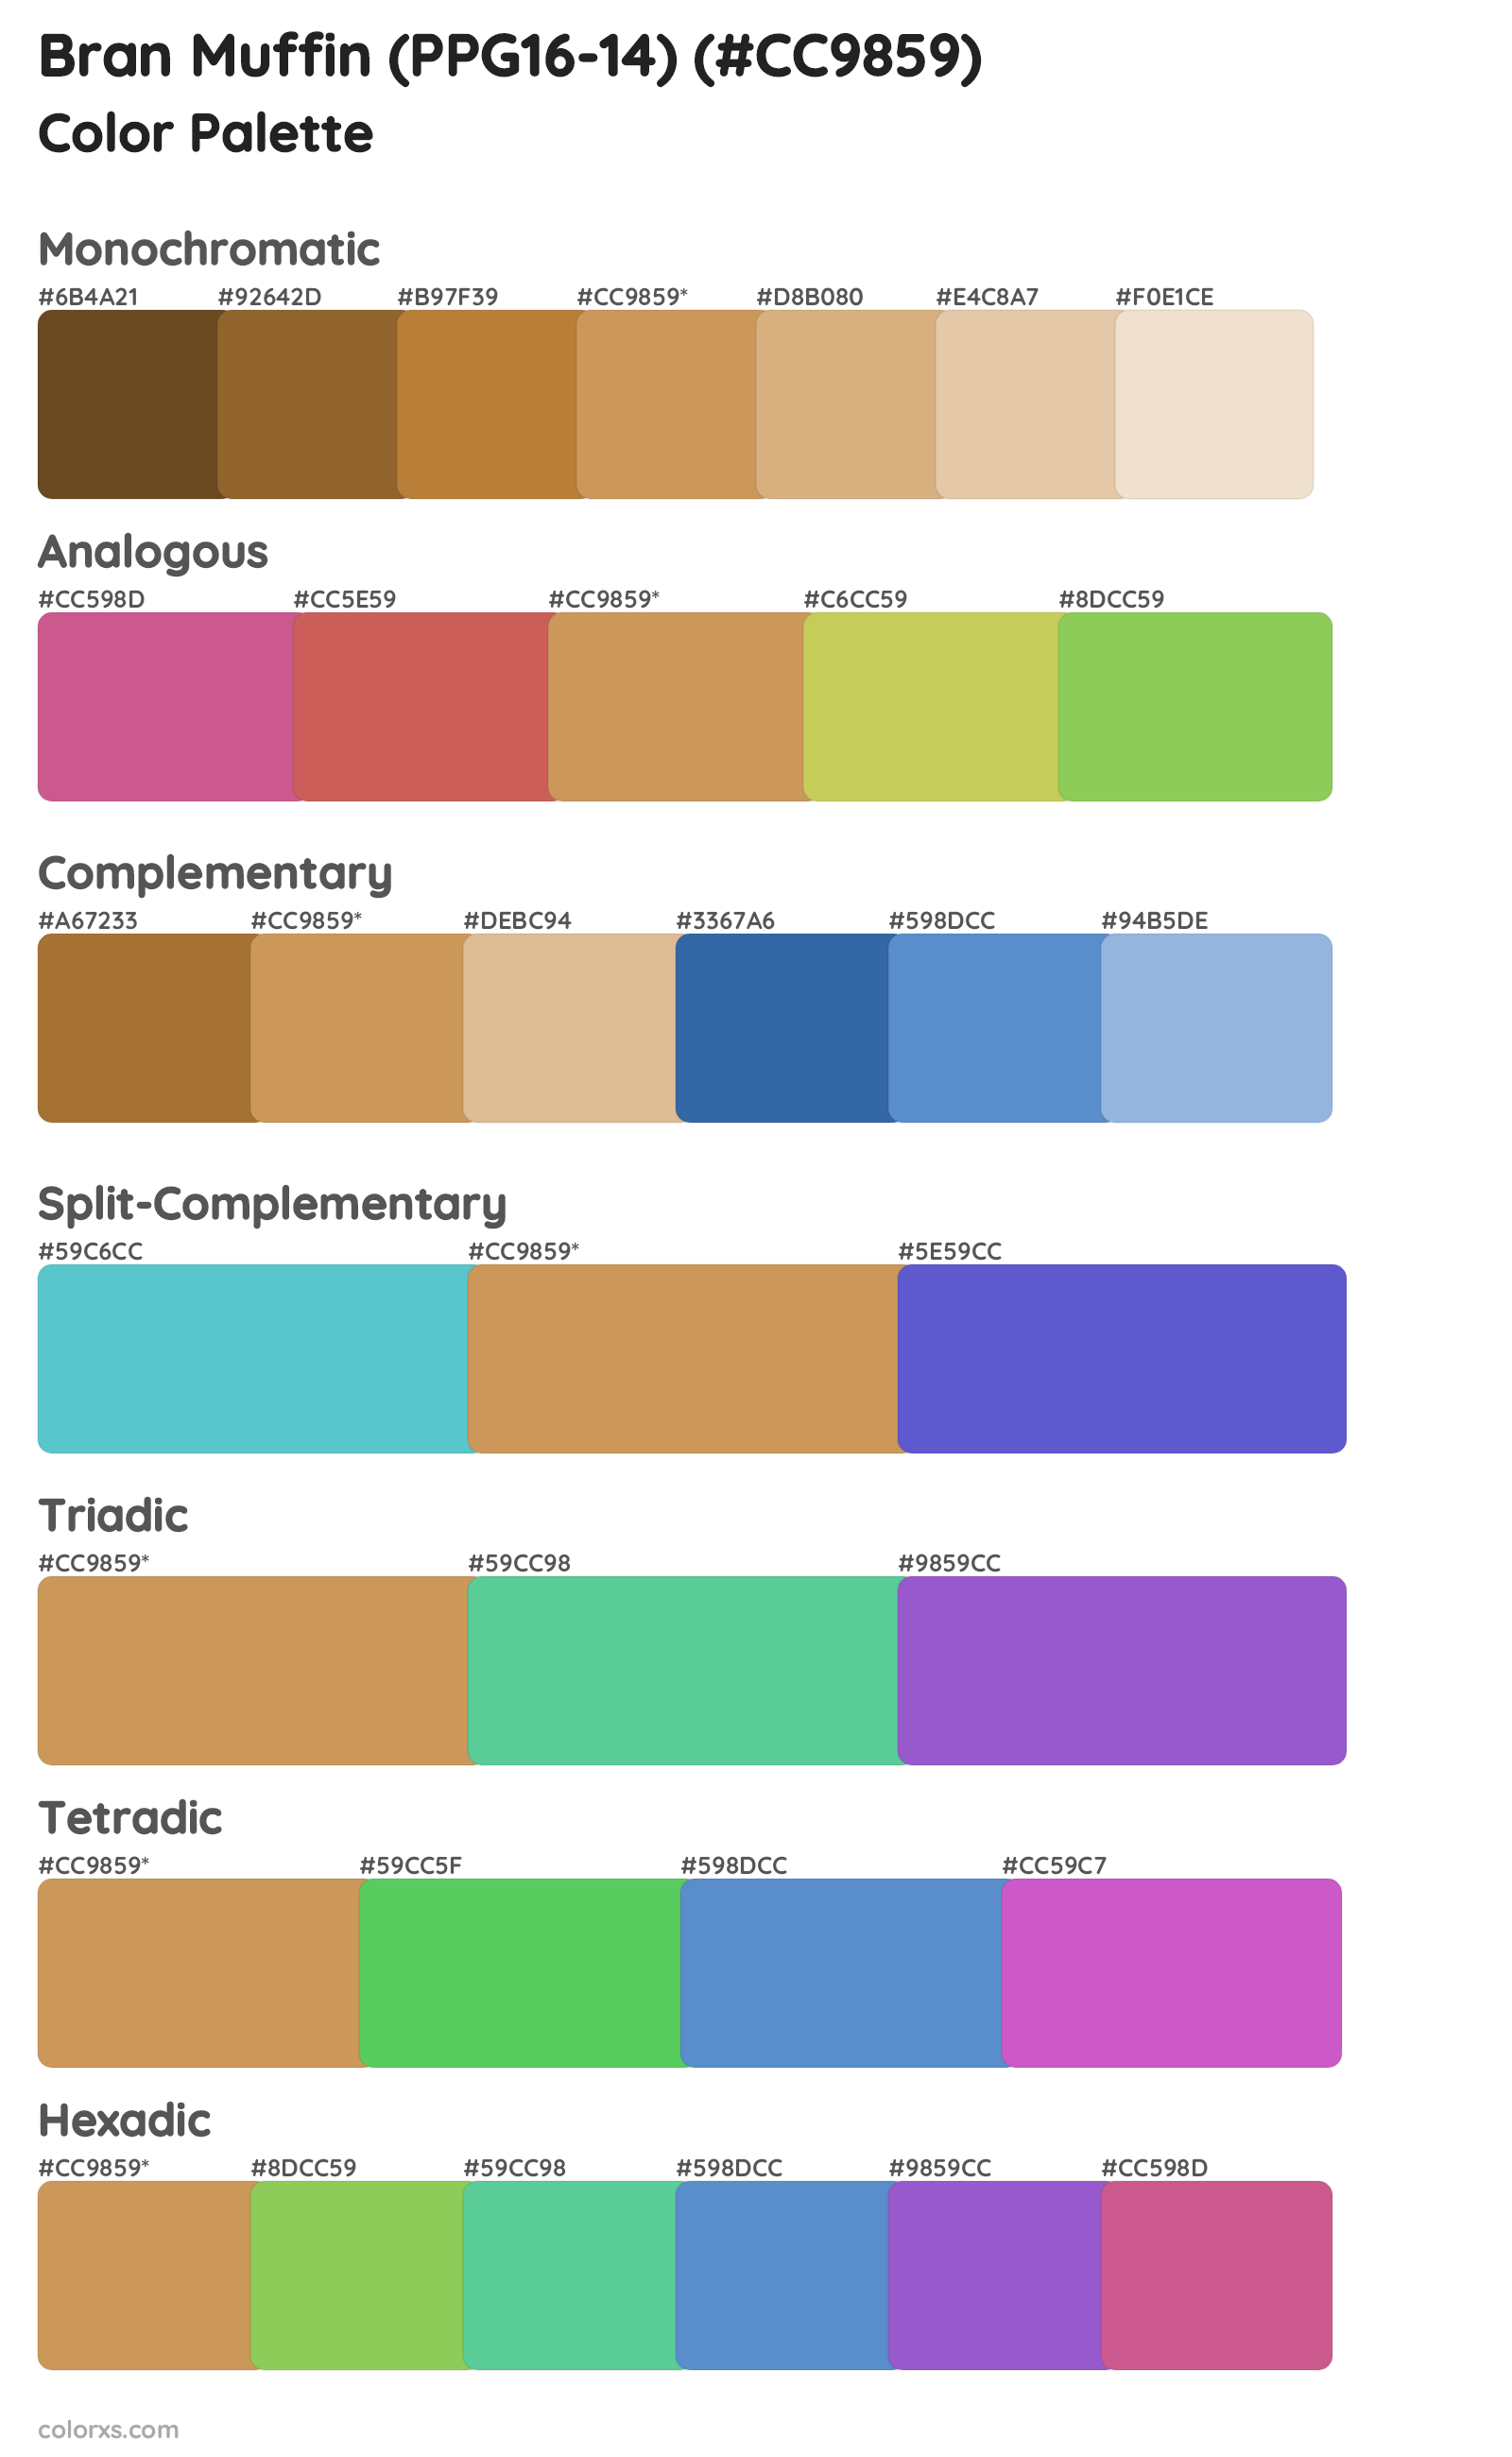 Bran Muffin (PPG16-14) Color Scheme Palettes